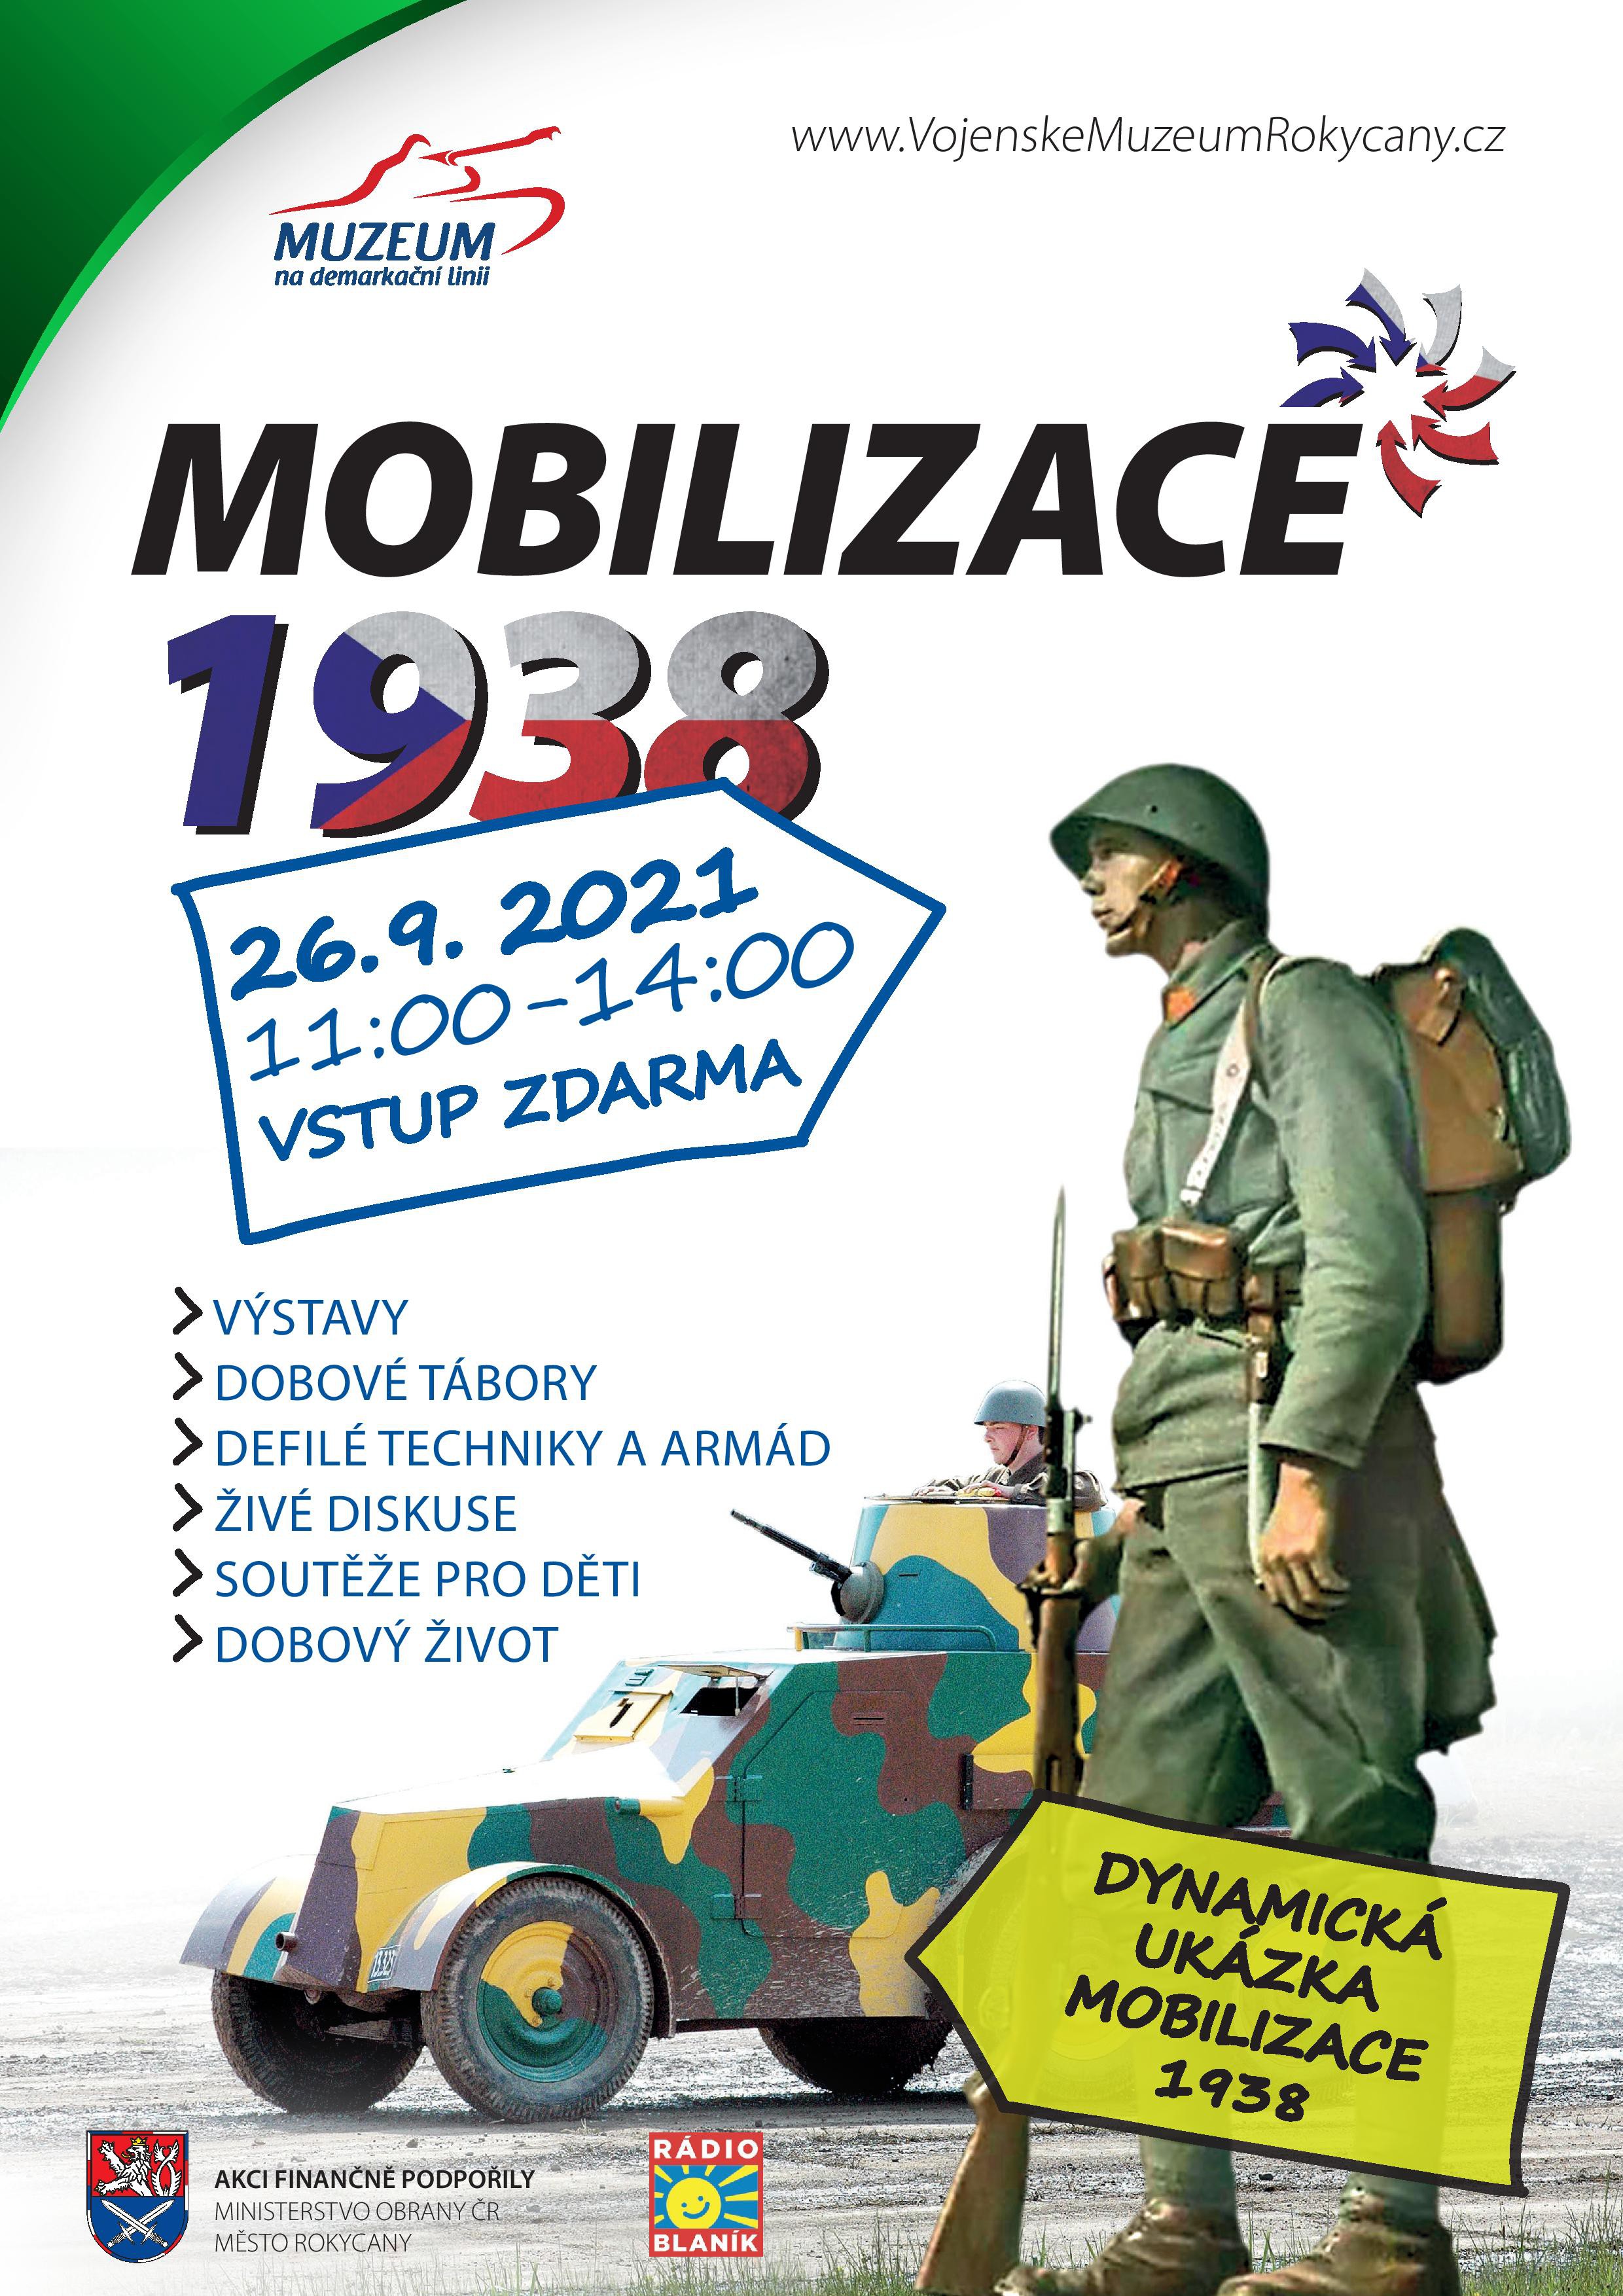 muzeum_rokycany_mobilizace1938_a2-page-001.jpg